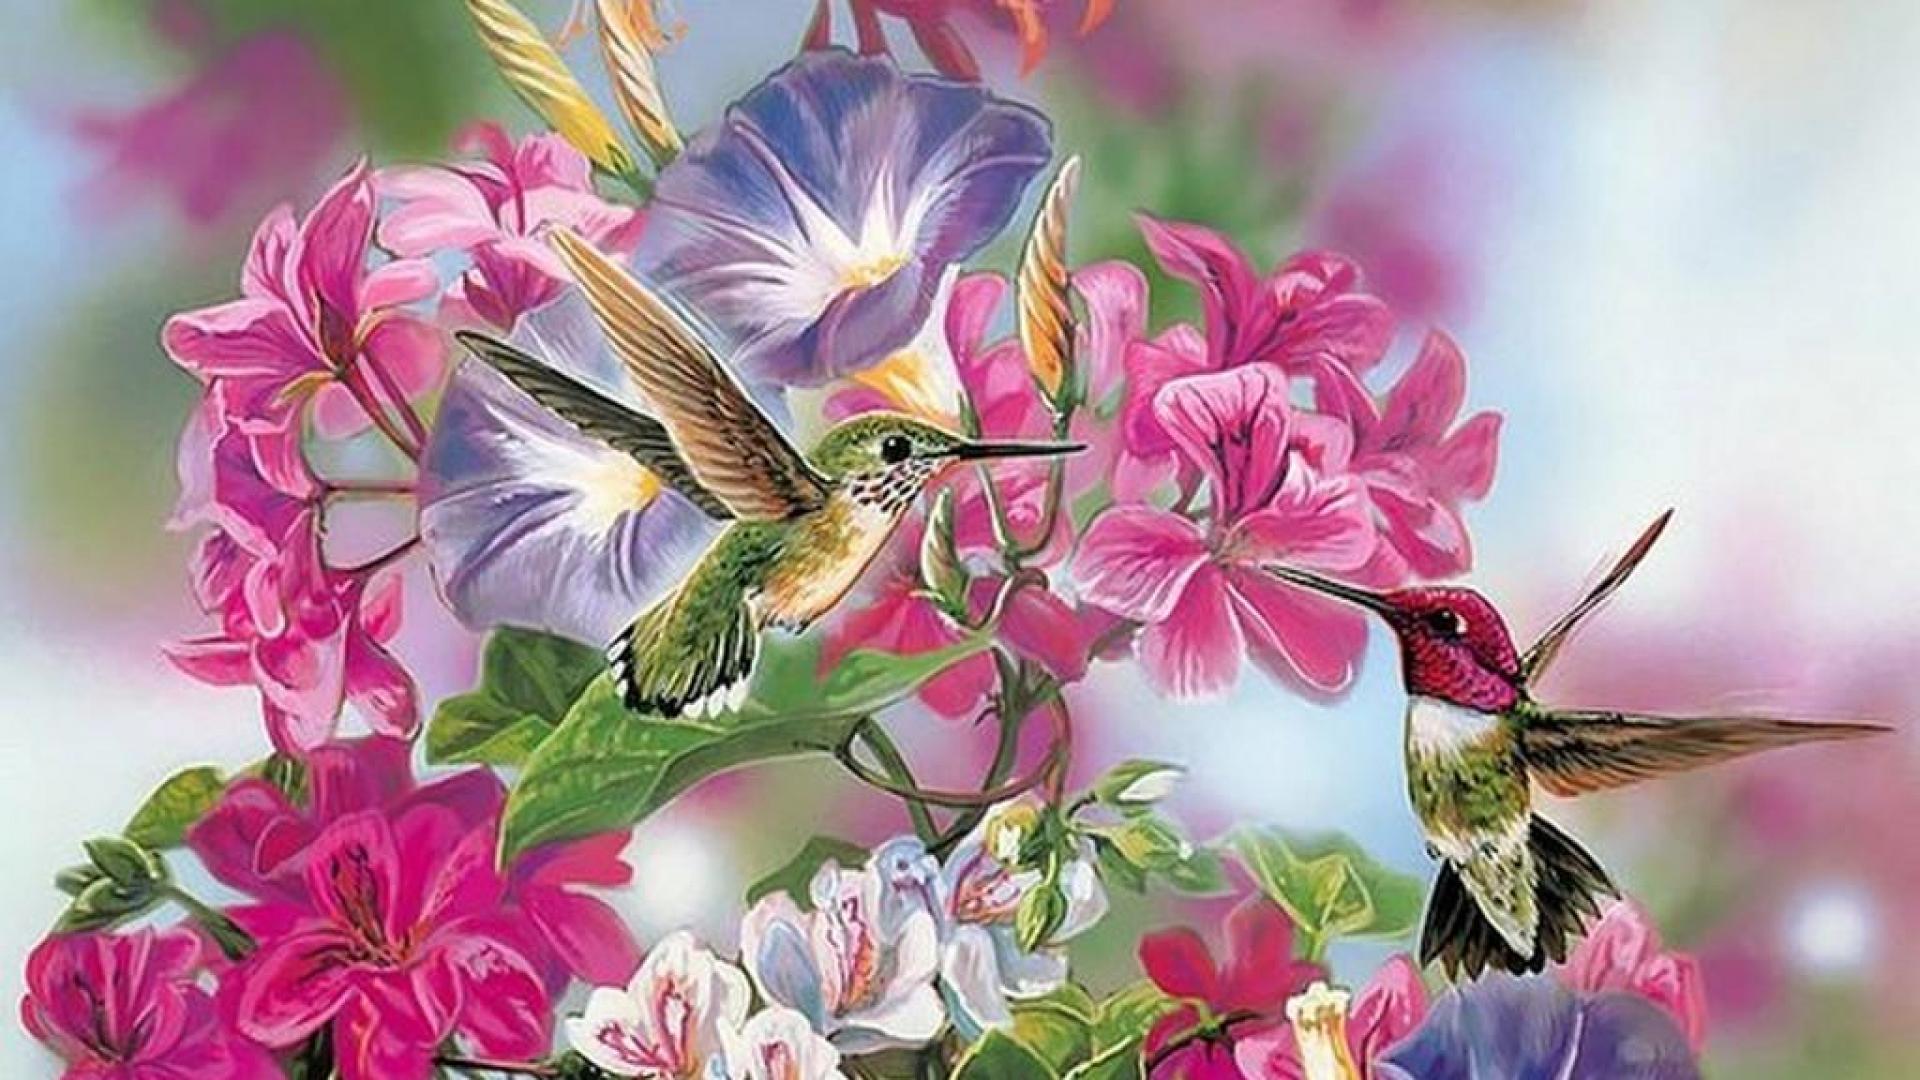 Hummingbirds In The Flowers Wallpaper Hq Desktop